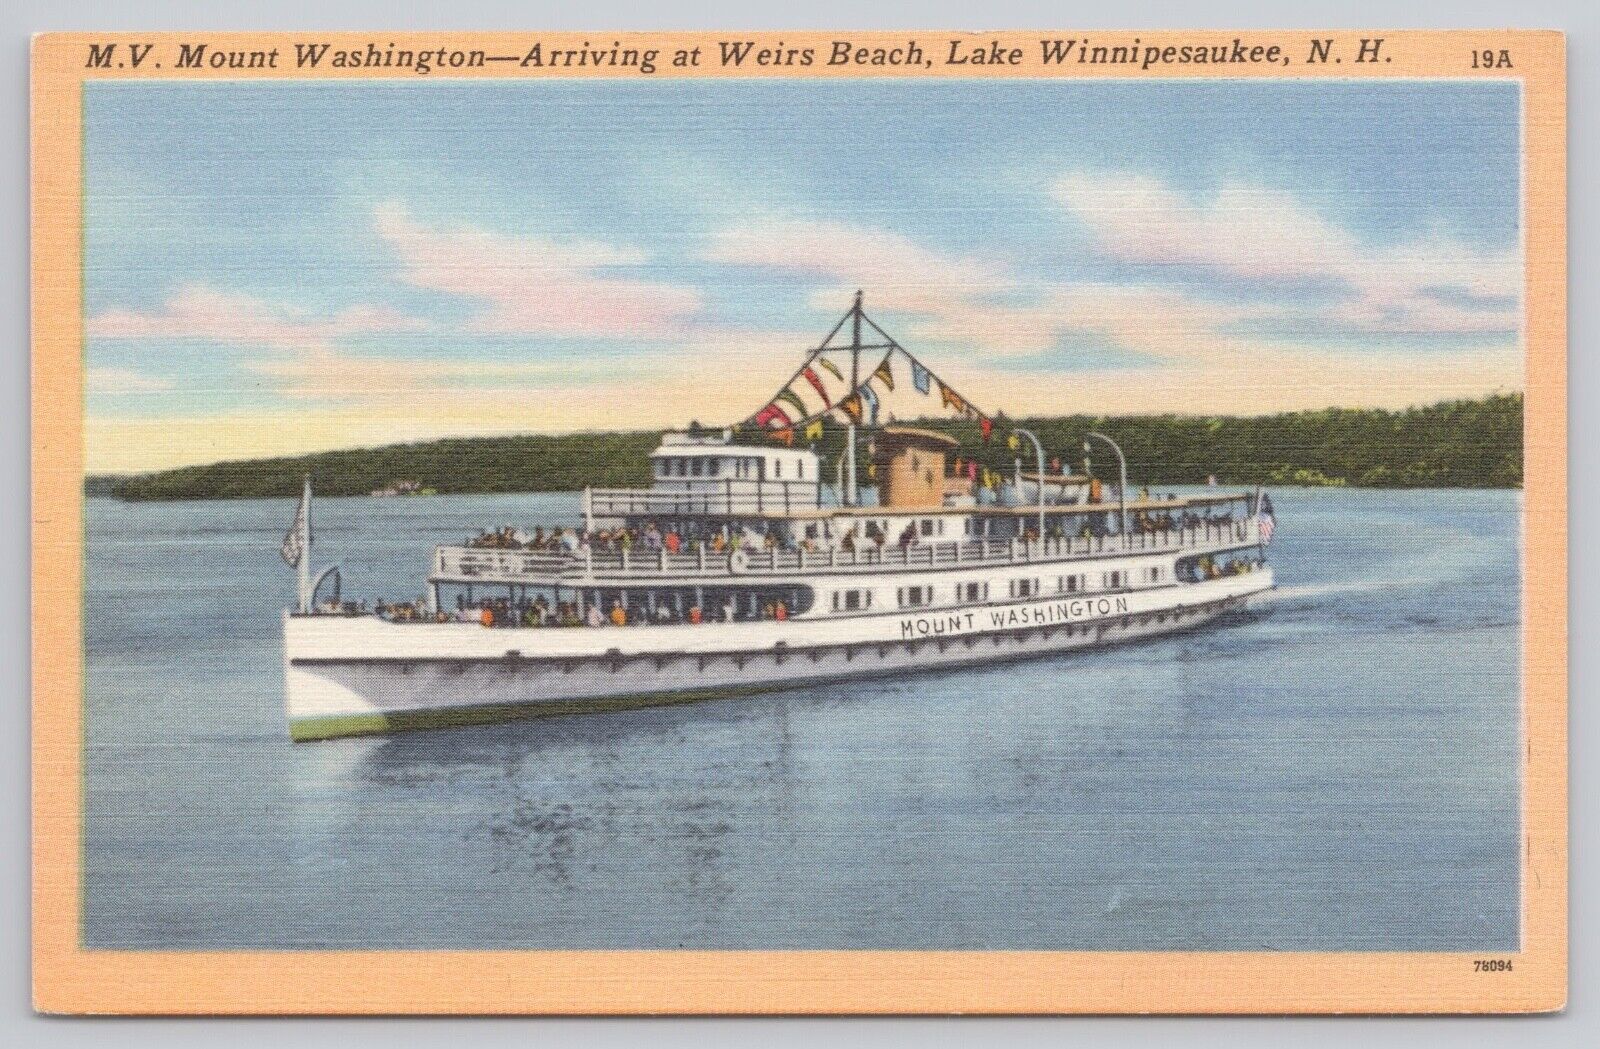 New Hampshire (NH) View Postcard: M. V. Mount Washington Boat, Winnipesaukee